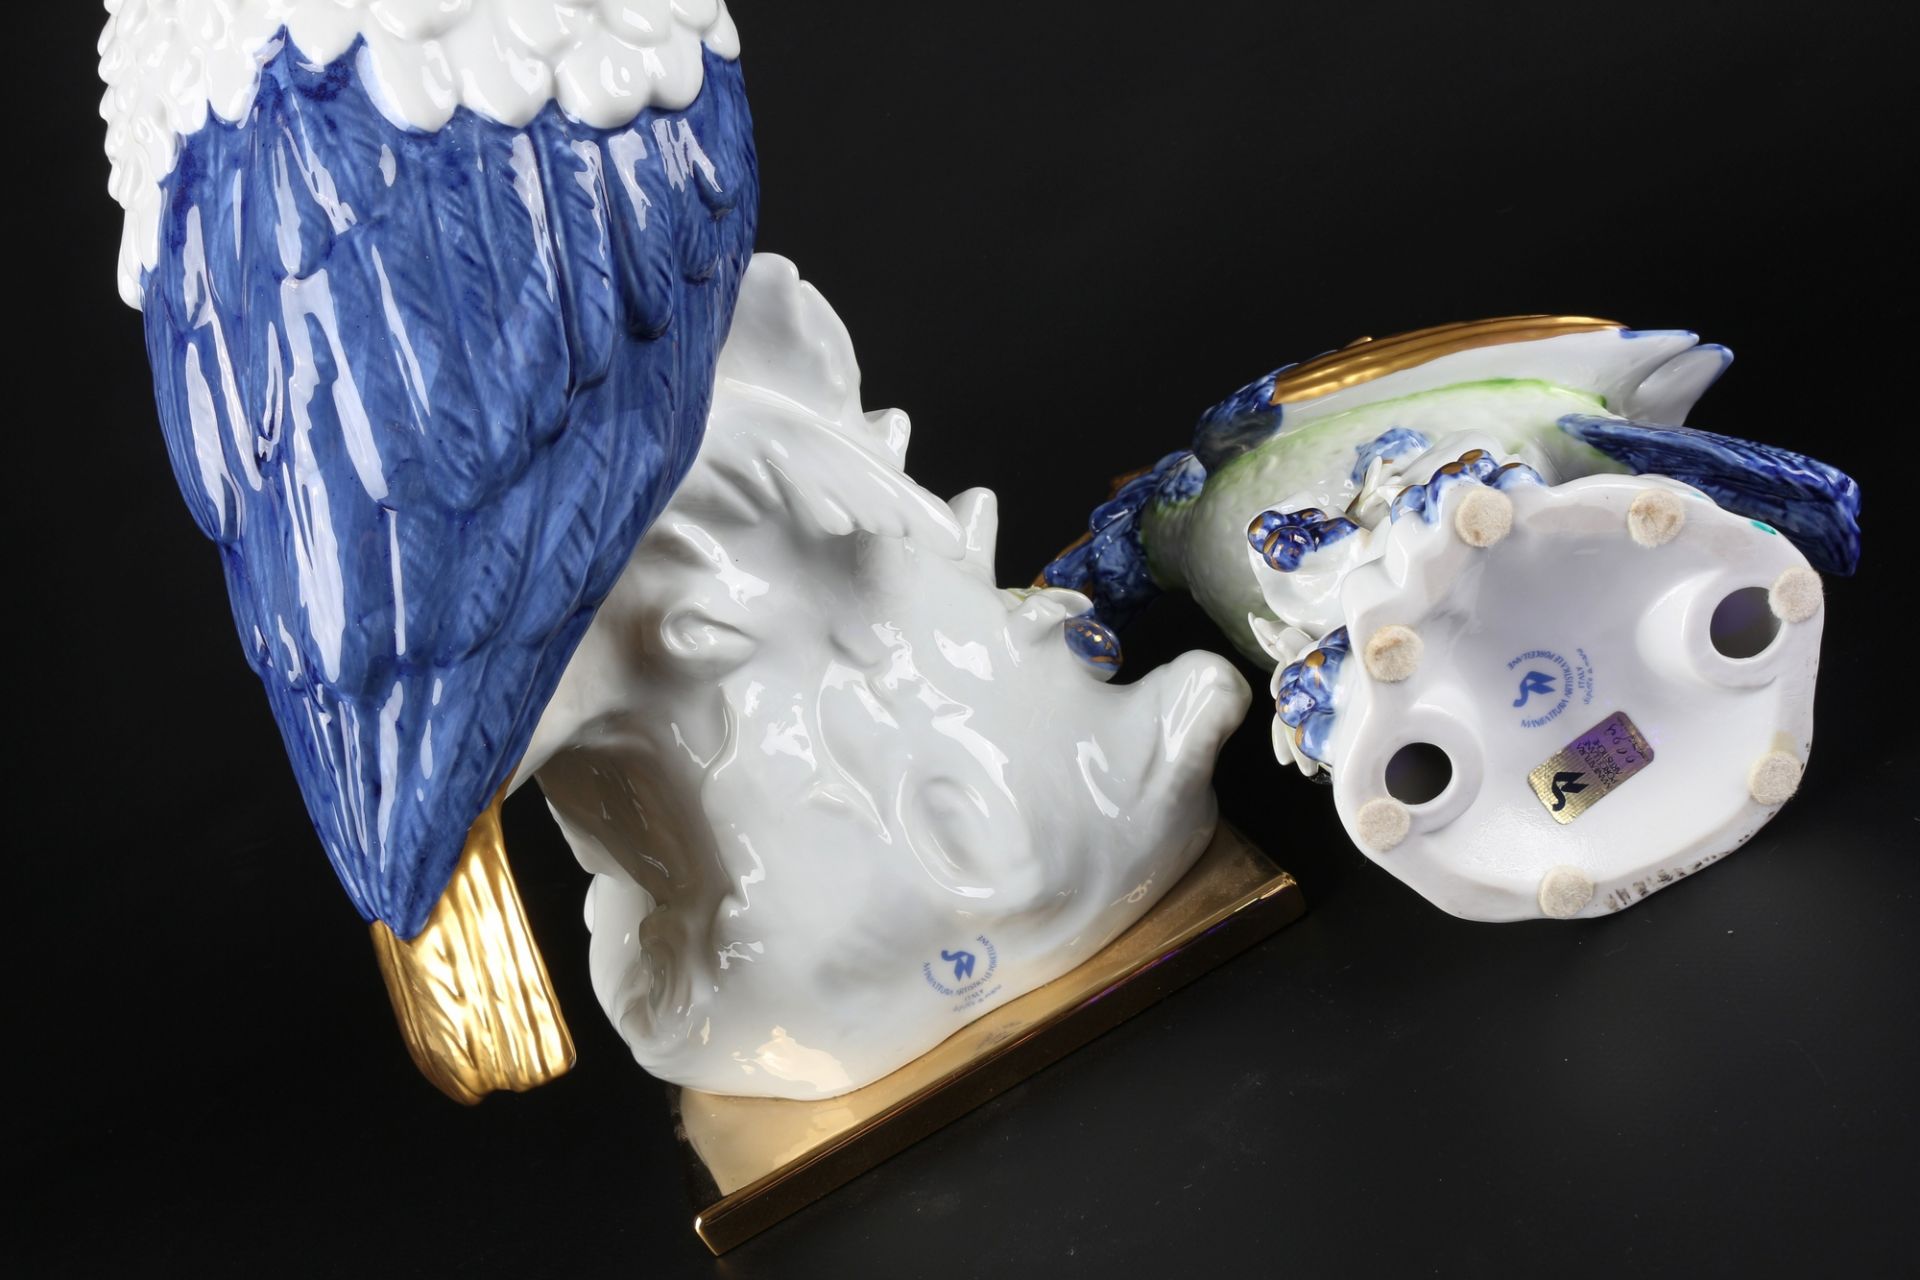 Manifattura Artistica le Porcellane großer Kakadu mit 2 Wiedehopfe, porcelain parrot / hoopoo, - Image 6 of 6